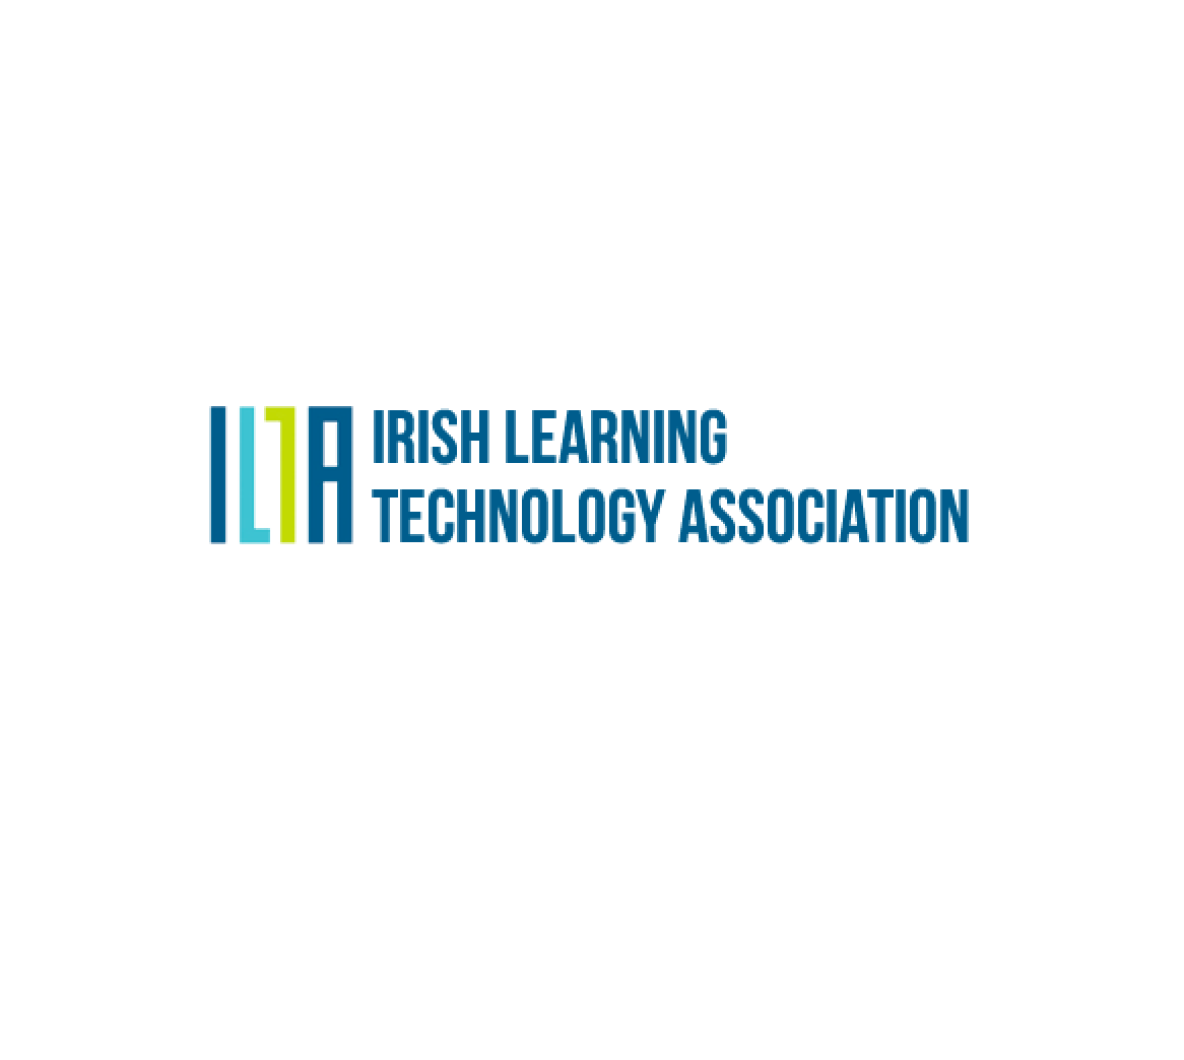 Image shows Learning technology association logo